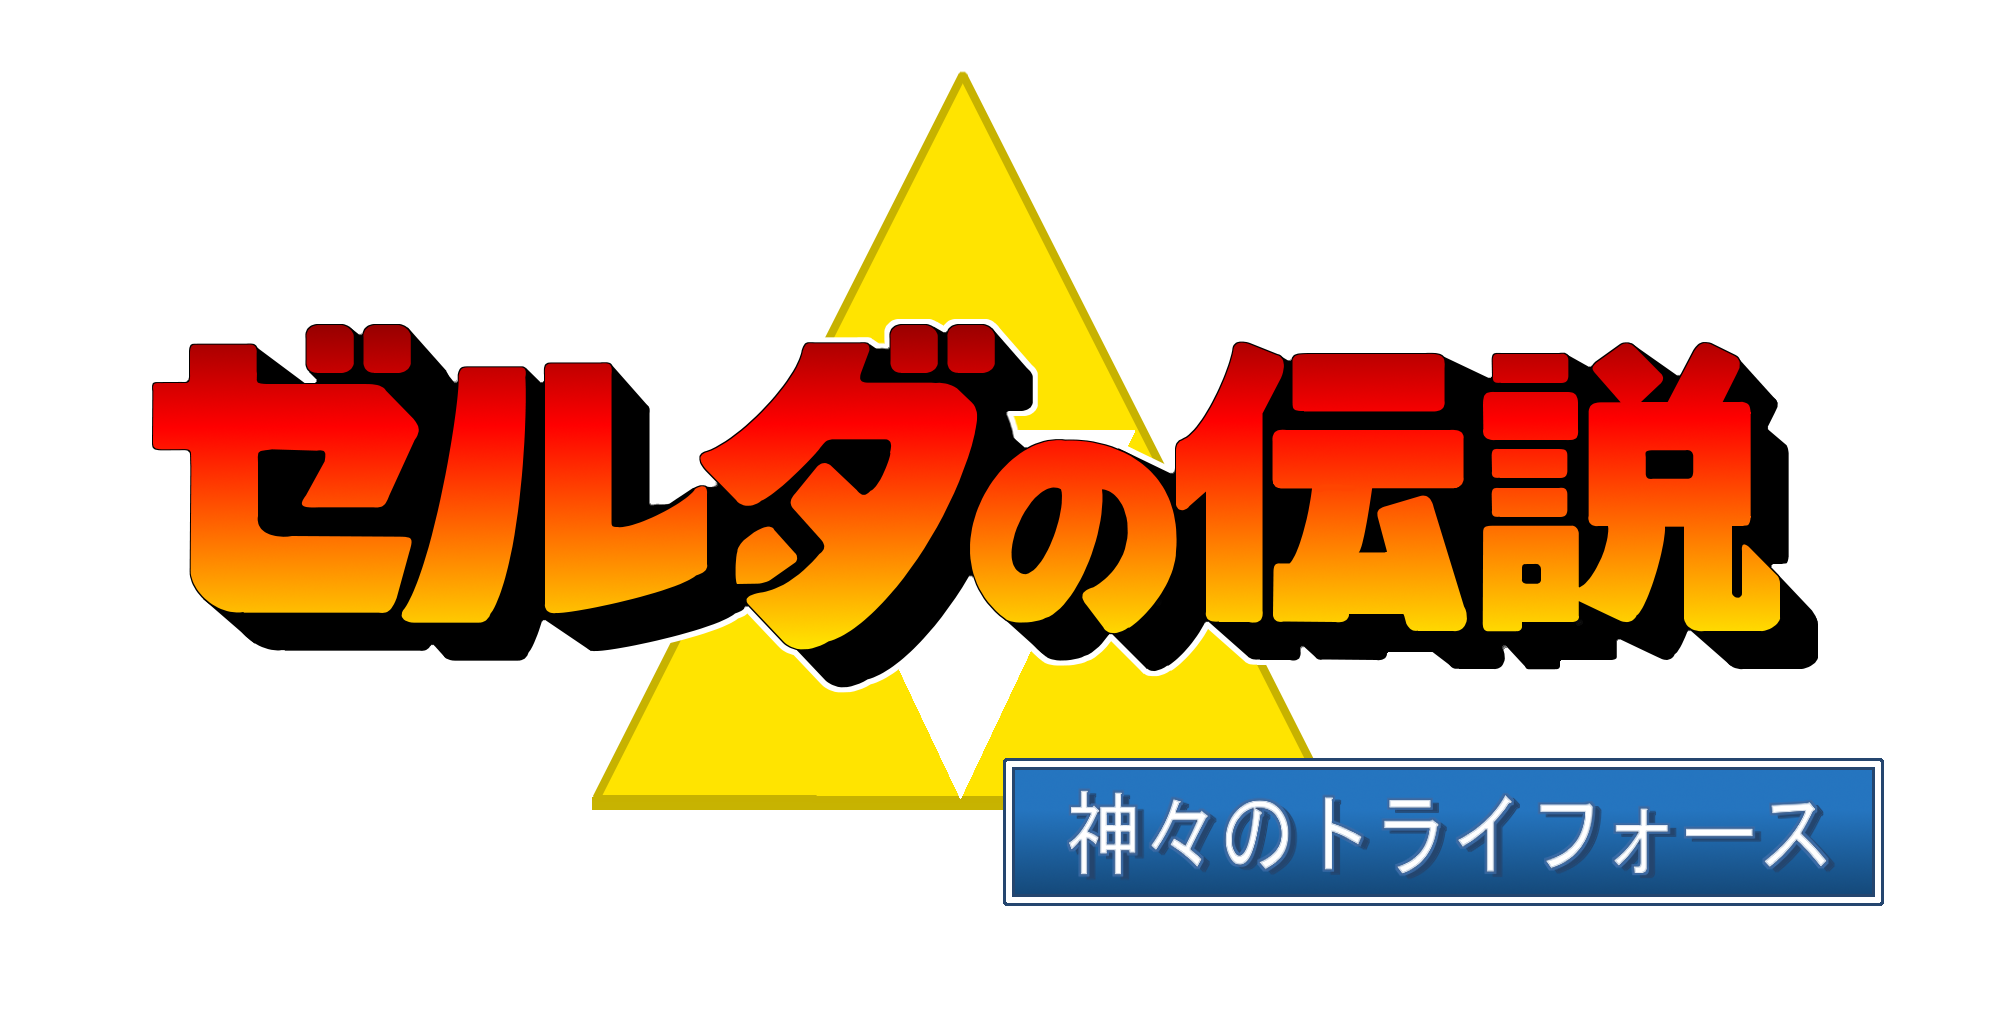 Legend Of Zelda : A Link To The Past Logo Hd (Jp) By Muums On Deviantart